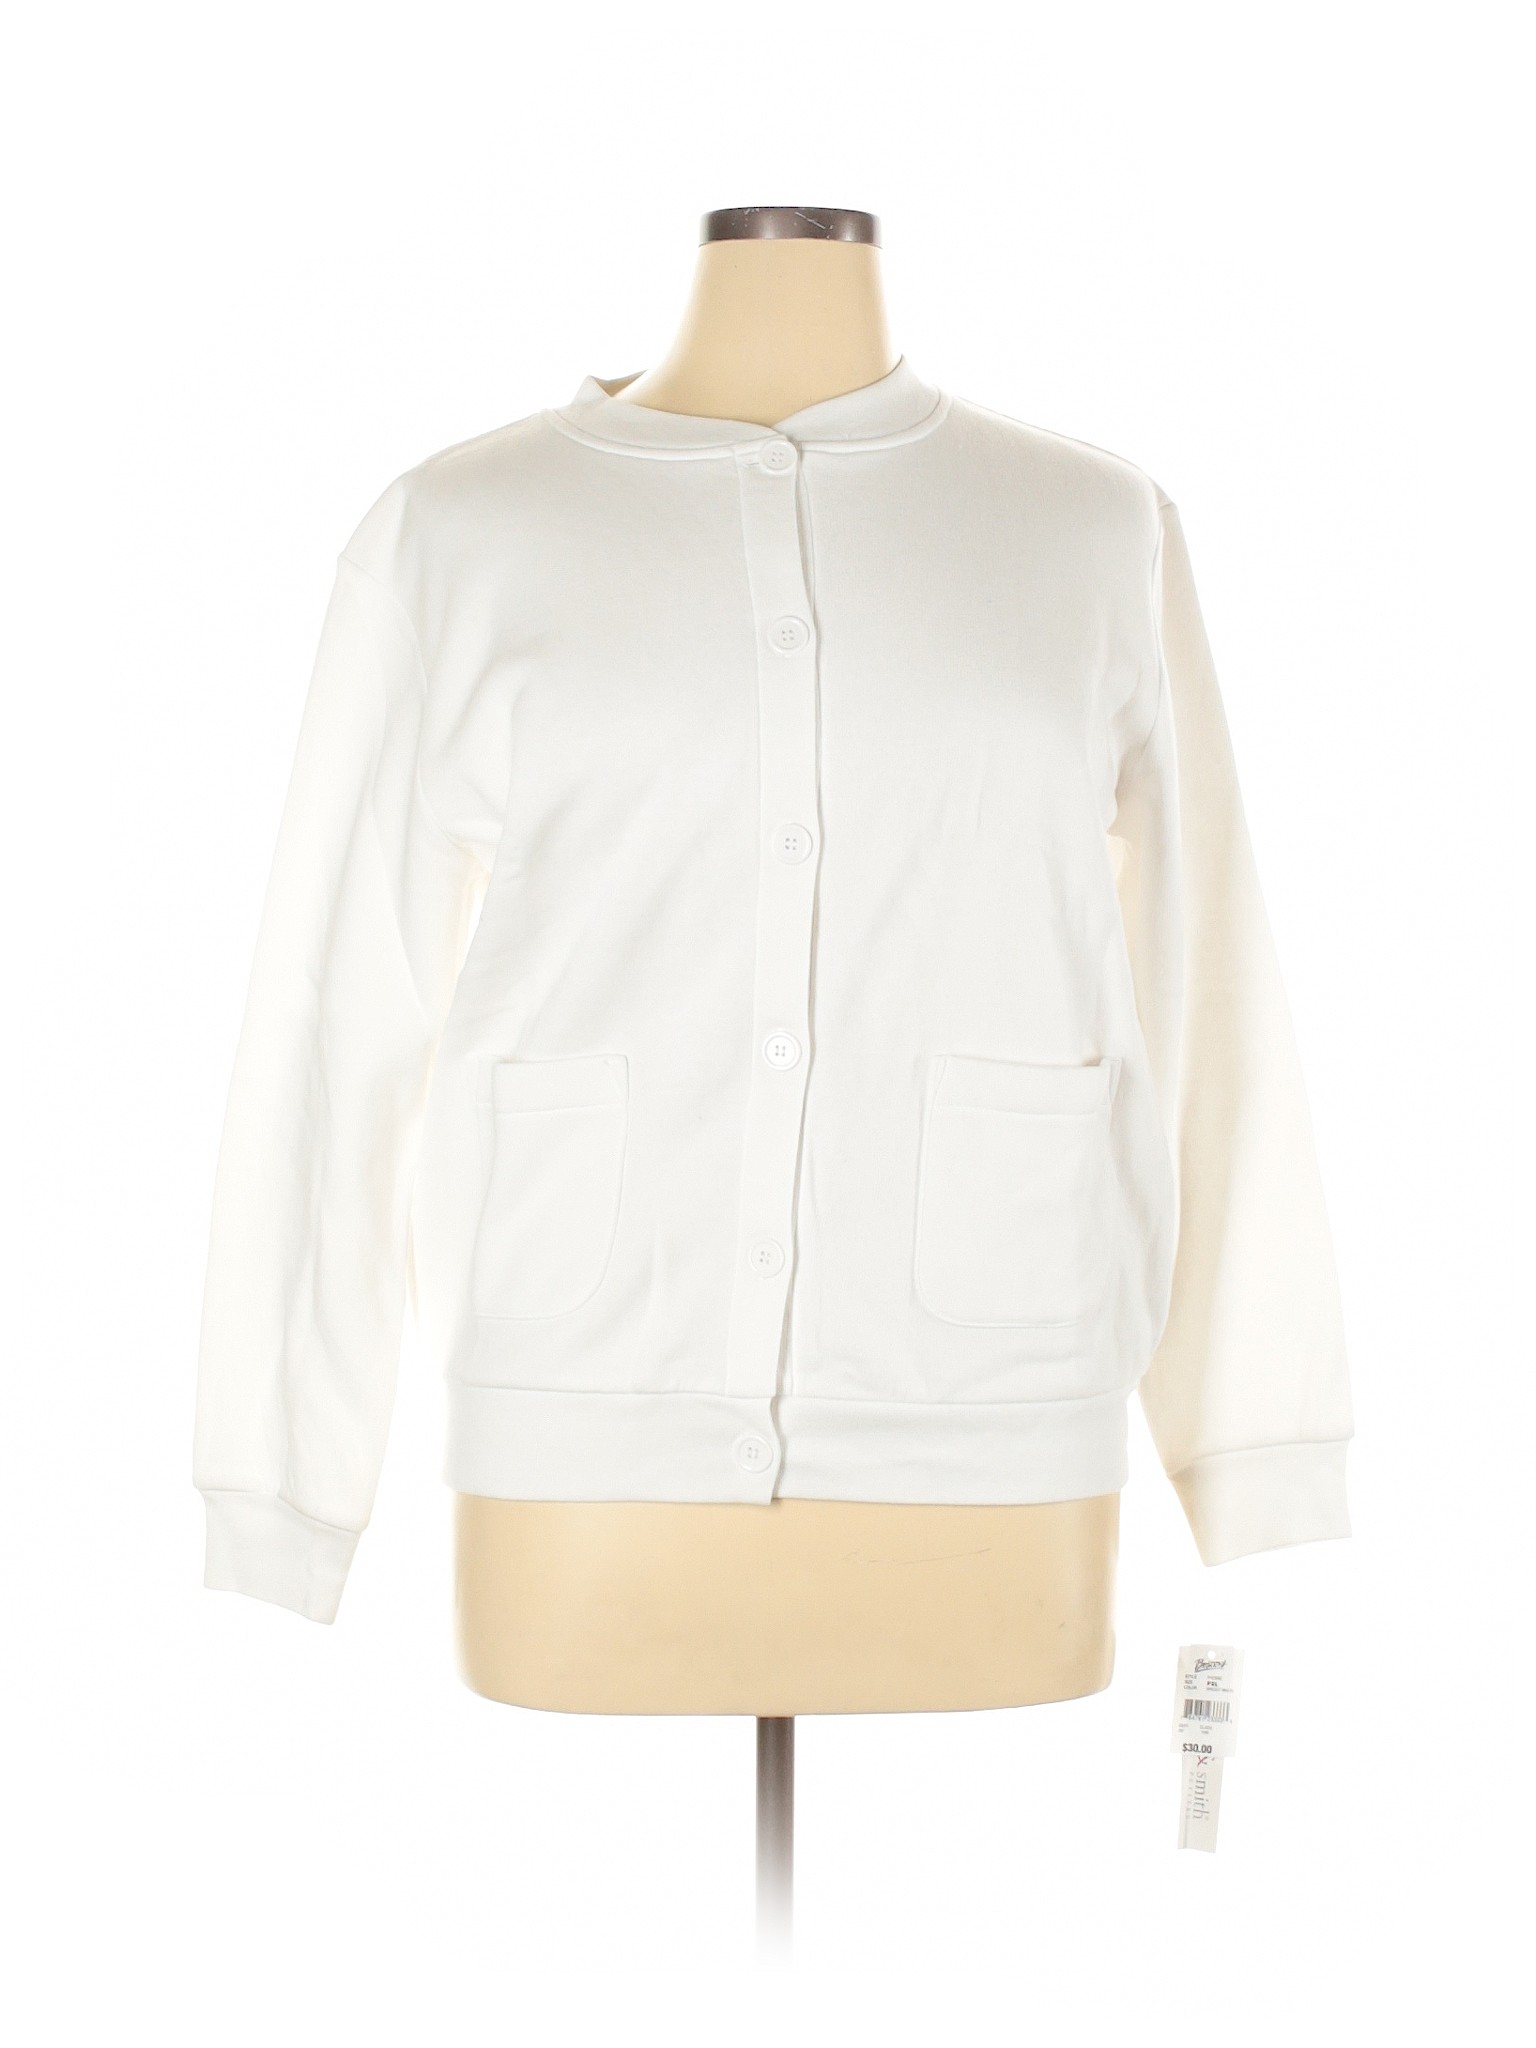 NWT Hasting & Smith Women White Cardigan XL Petites | eBay